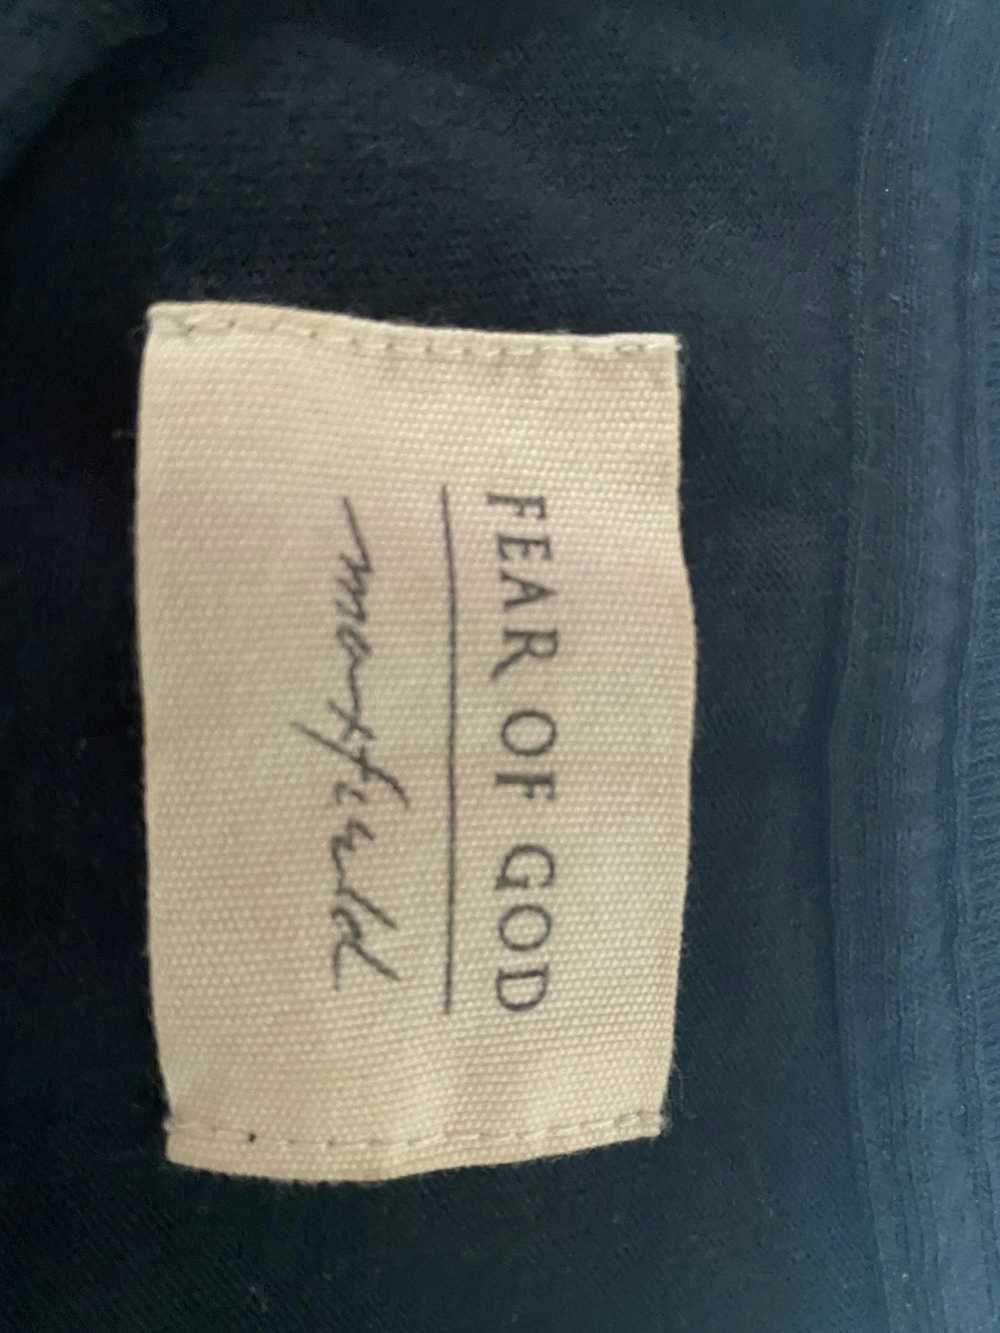 Fear of God Maxfield LS shirt - image 4